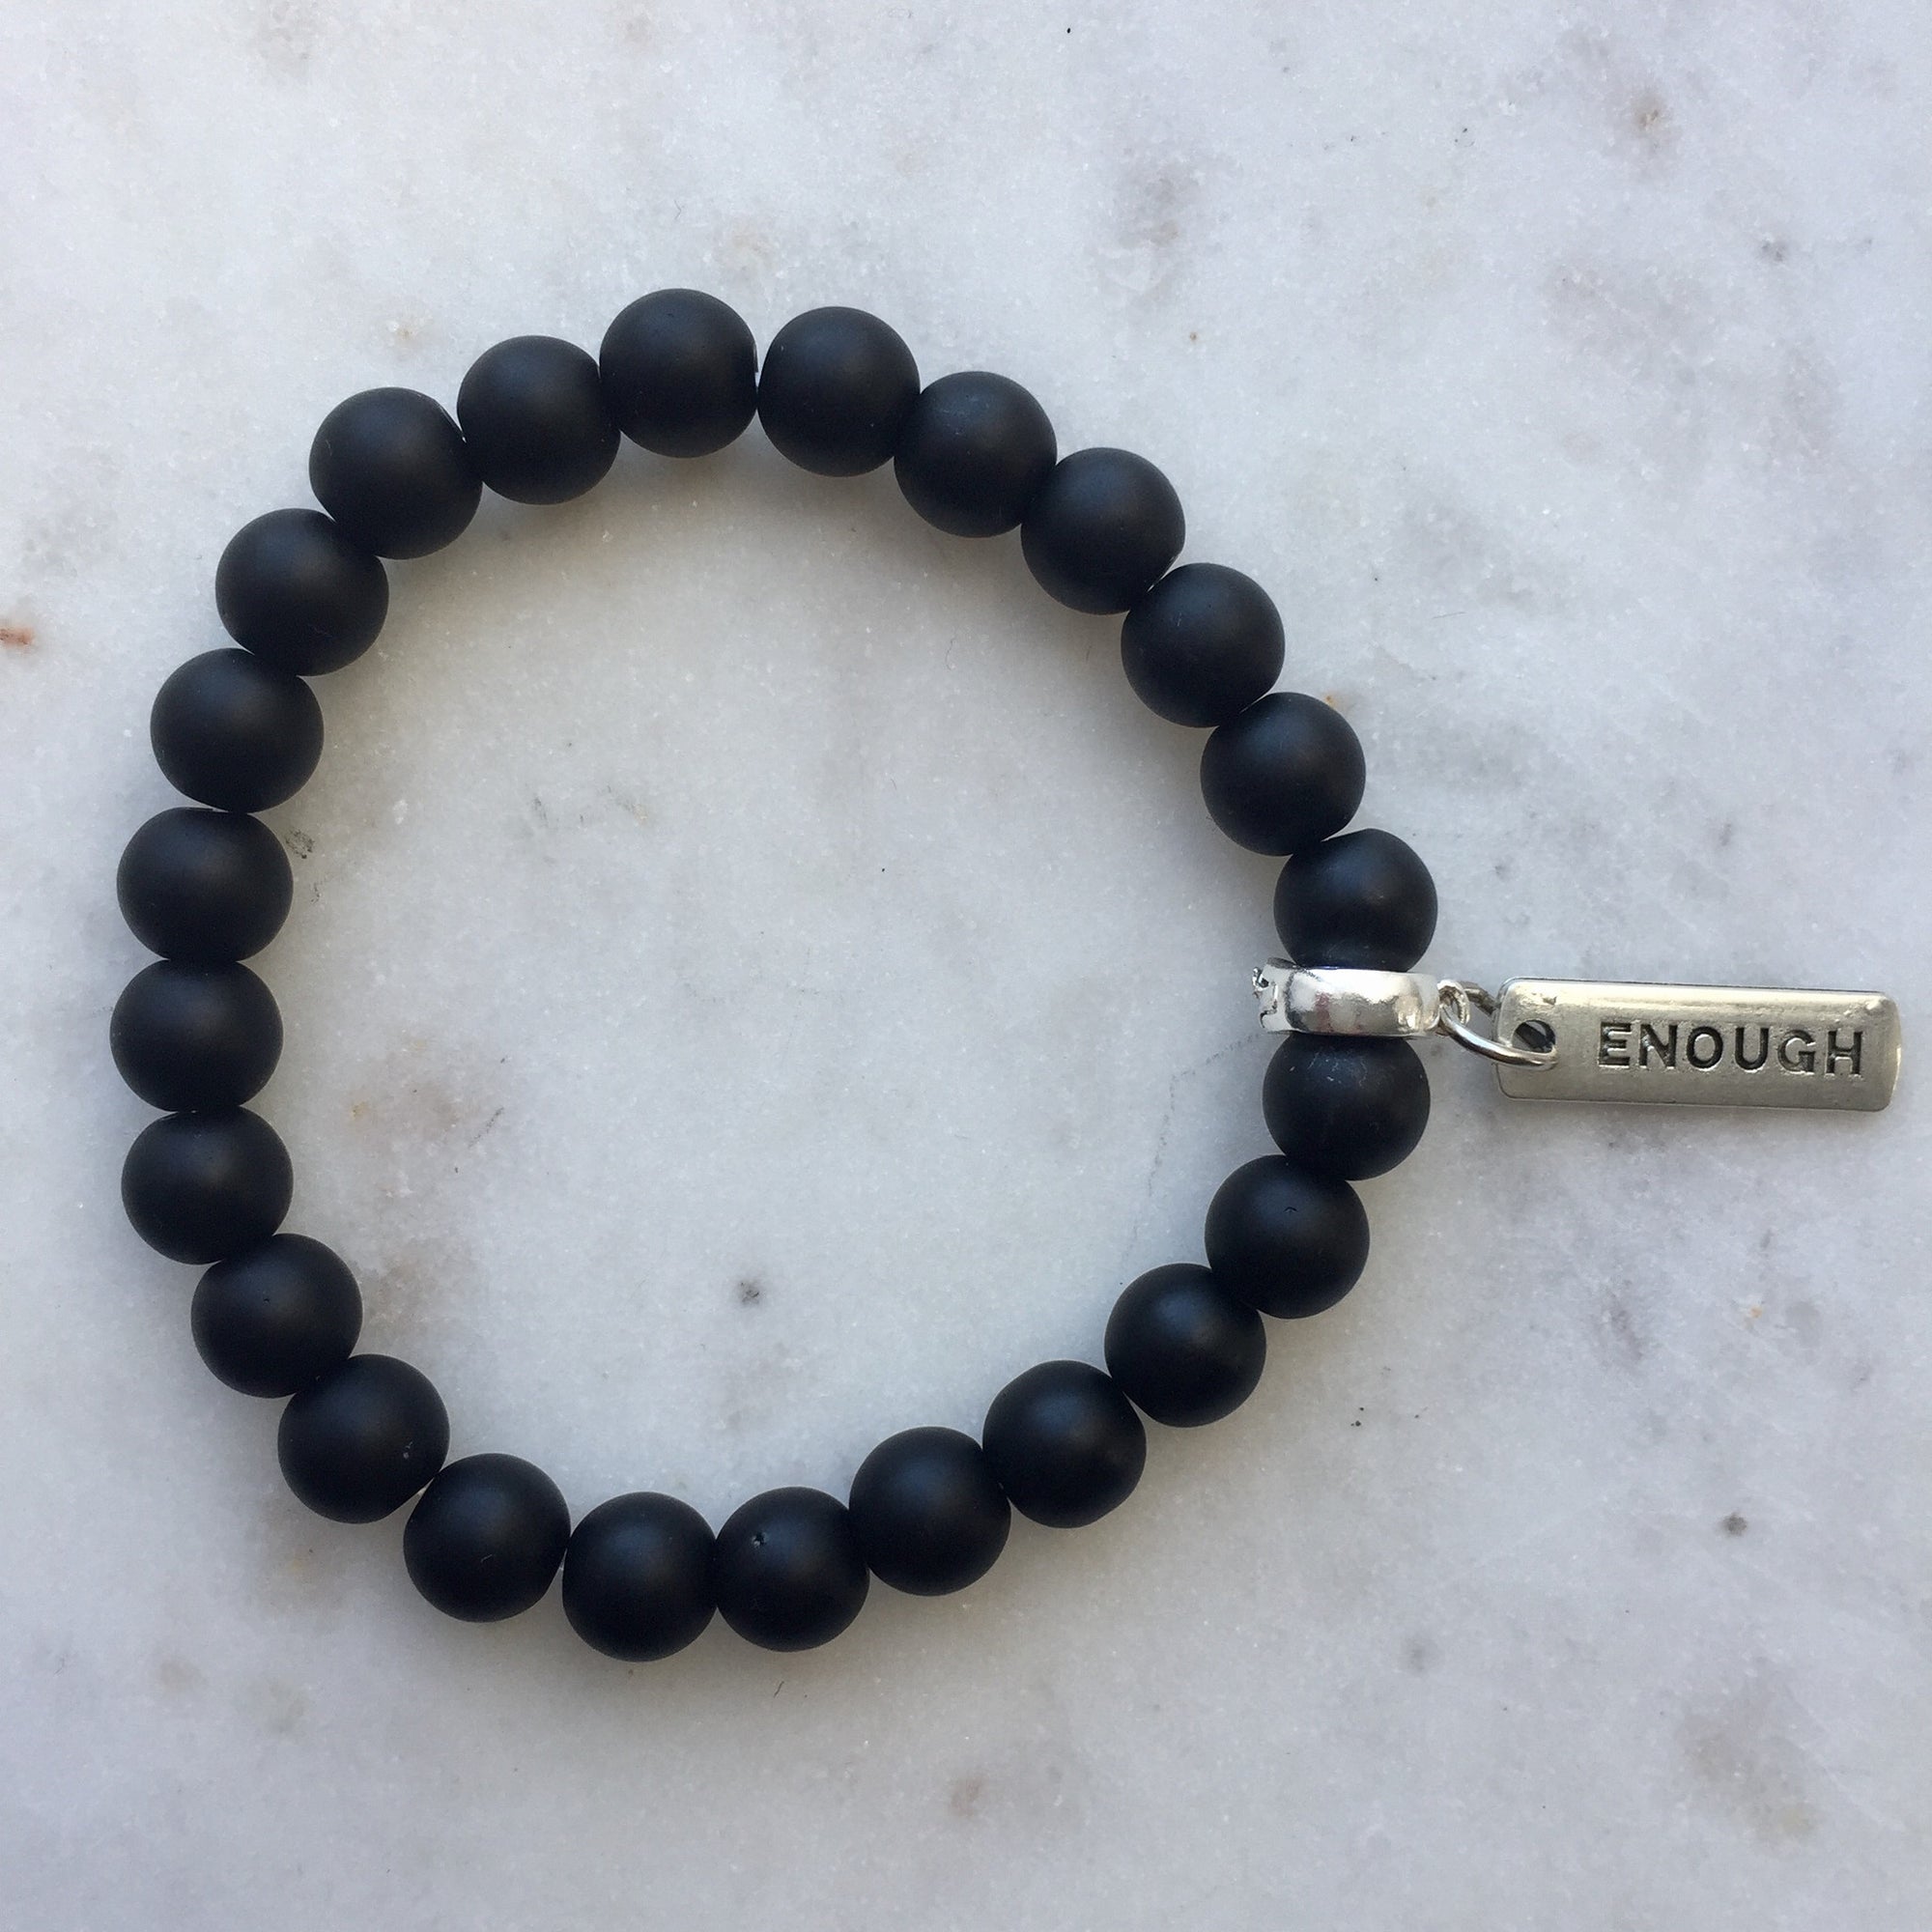 Black beads bracelet stock photo. Image of black, count - 80811082